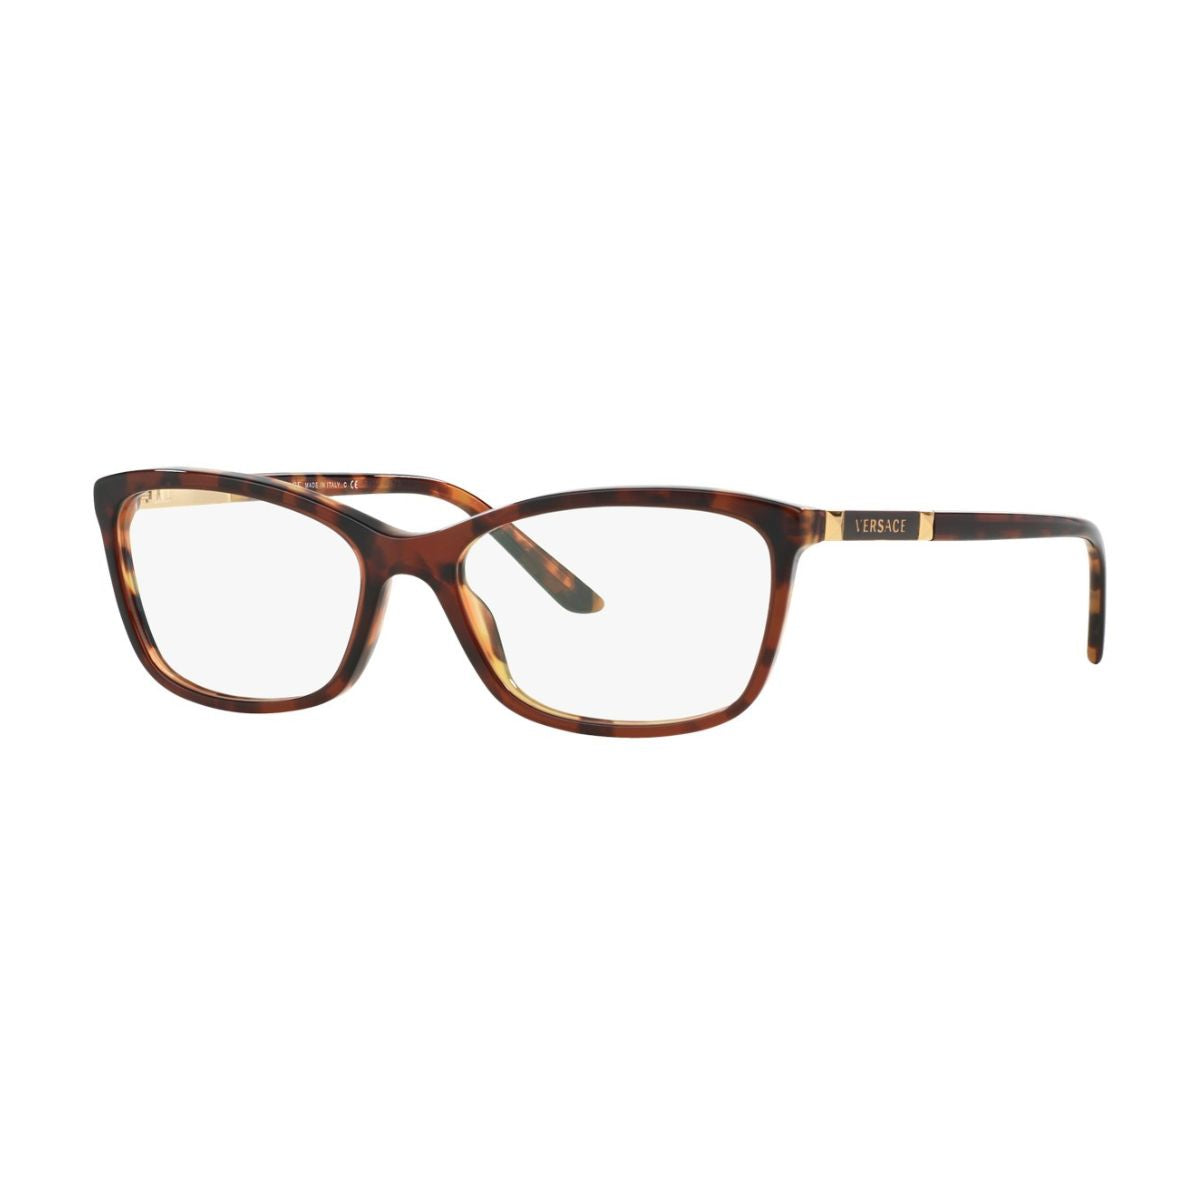 "best Versace 3186 5077 optical eyewear frames for women's at optorium"